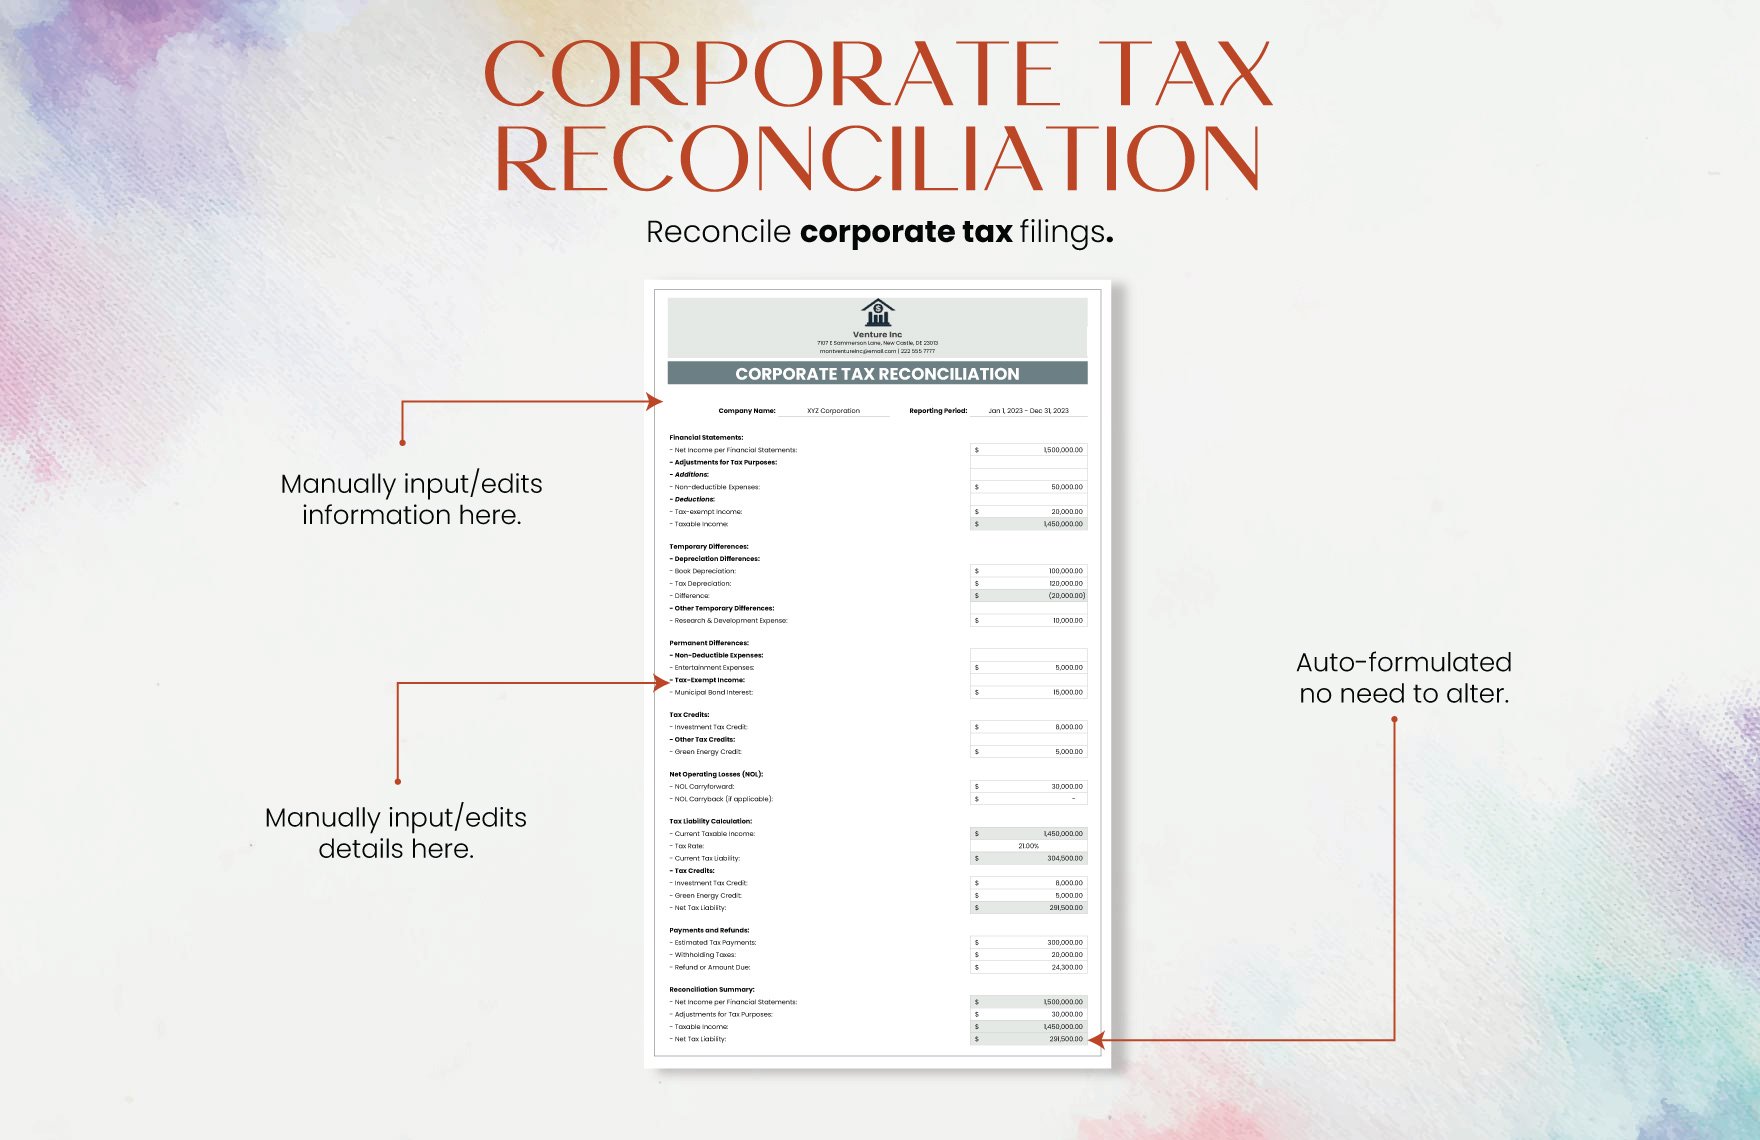 Corporate Tax Reconciliation Template